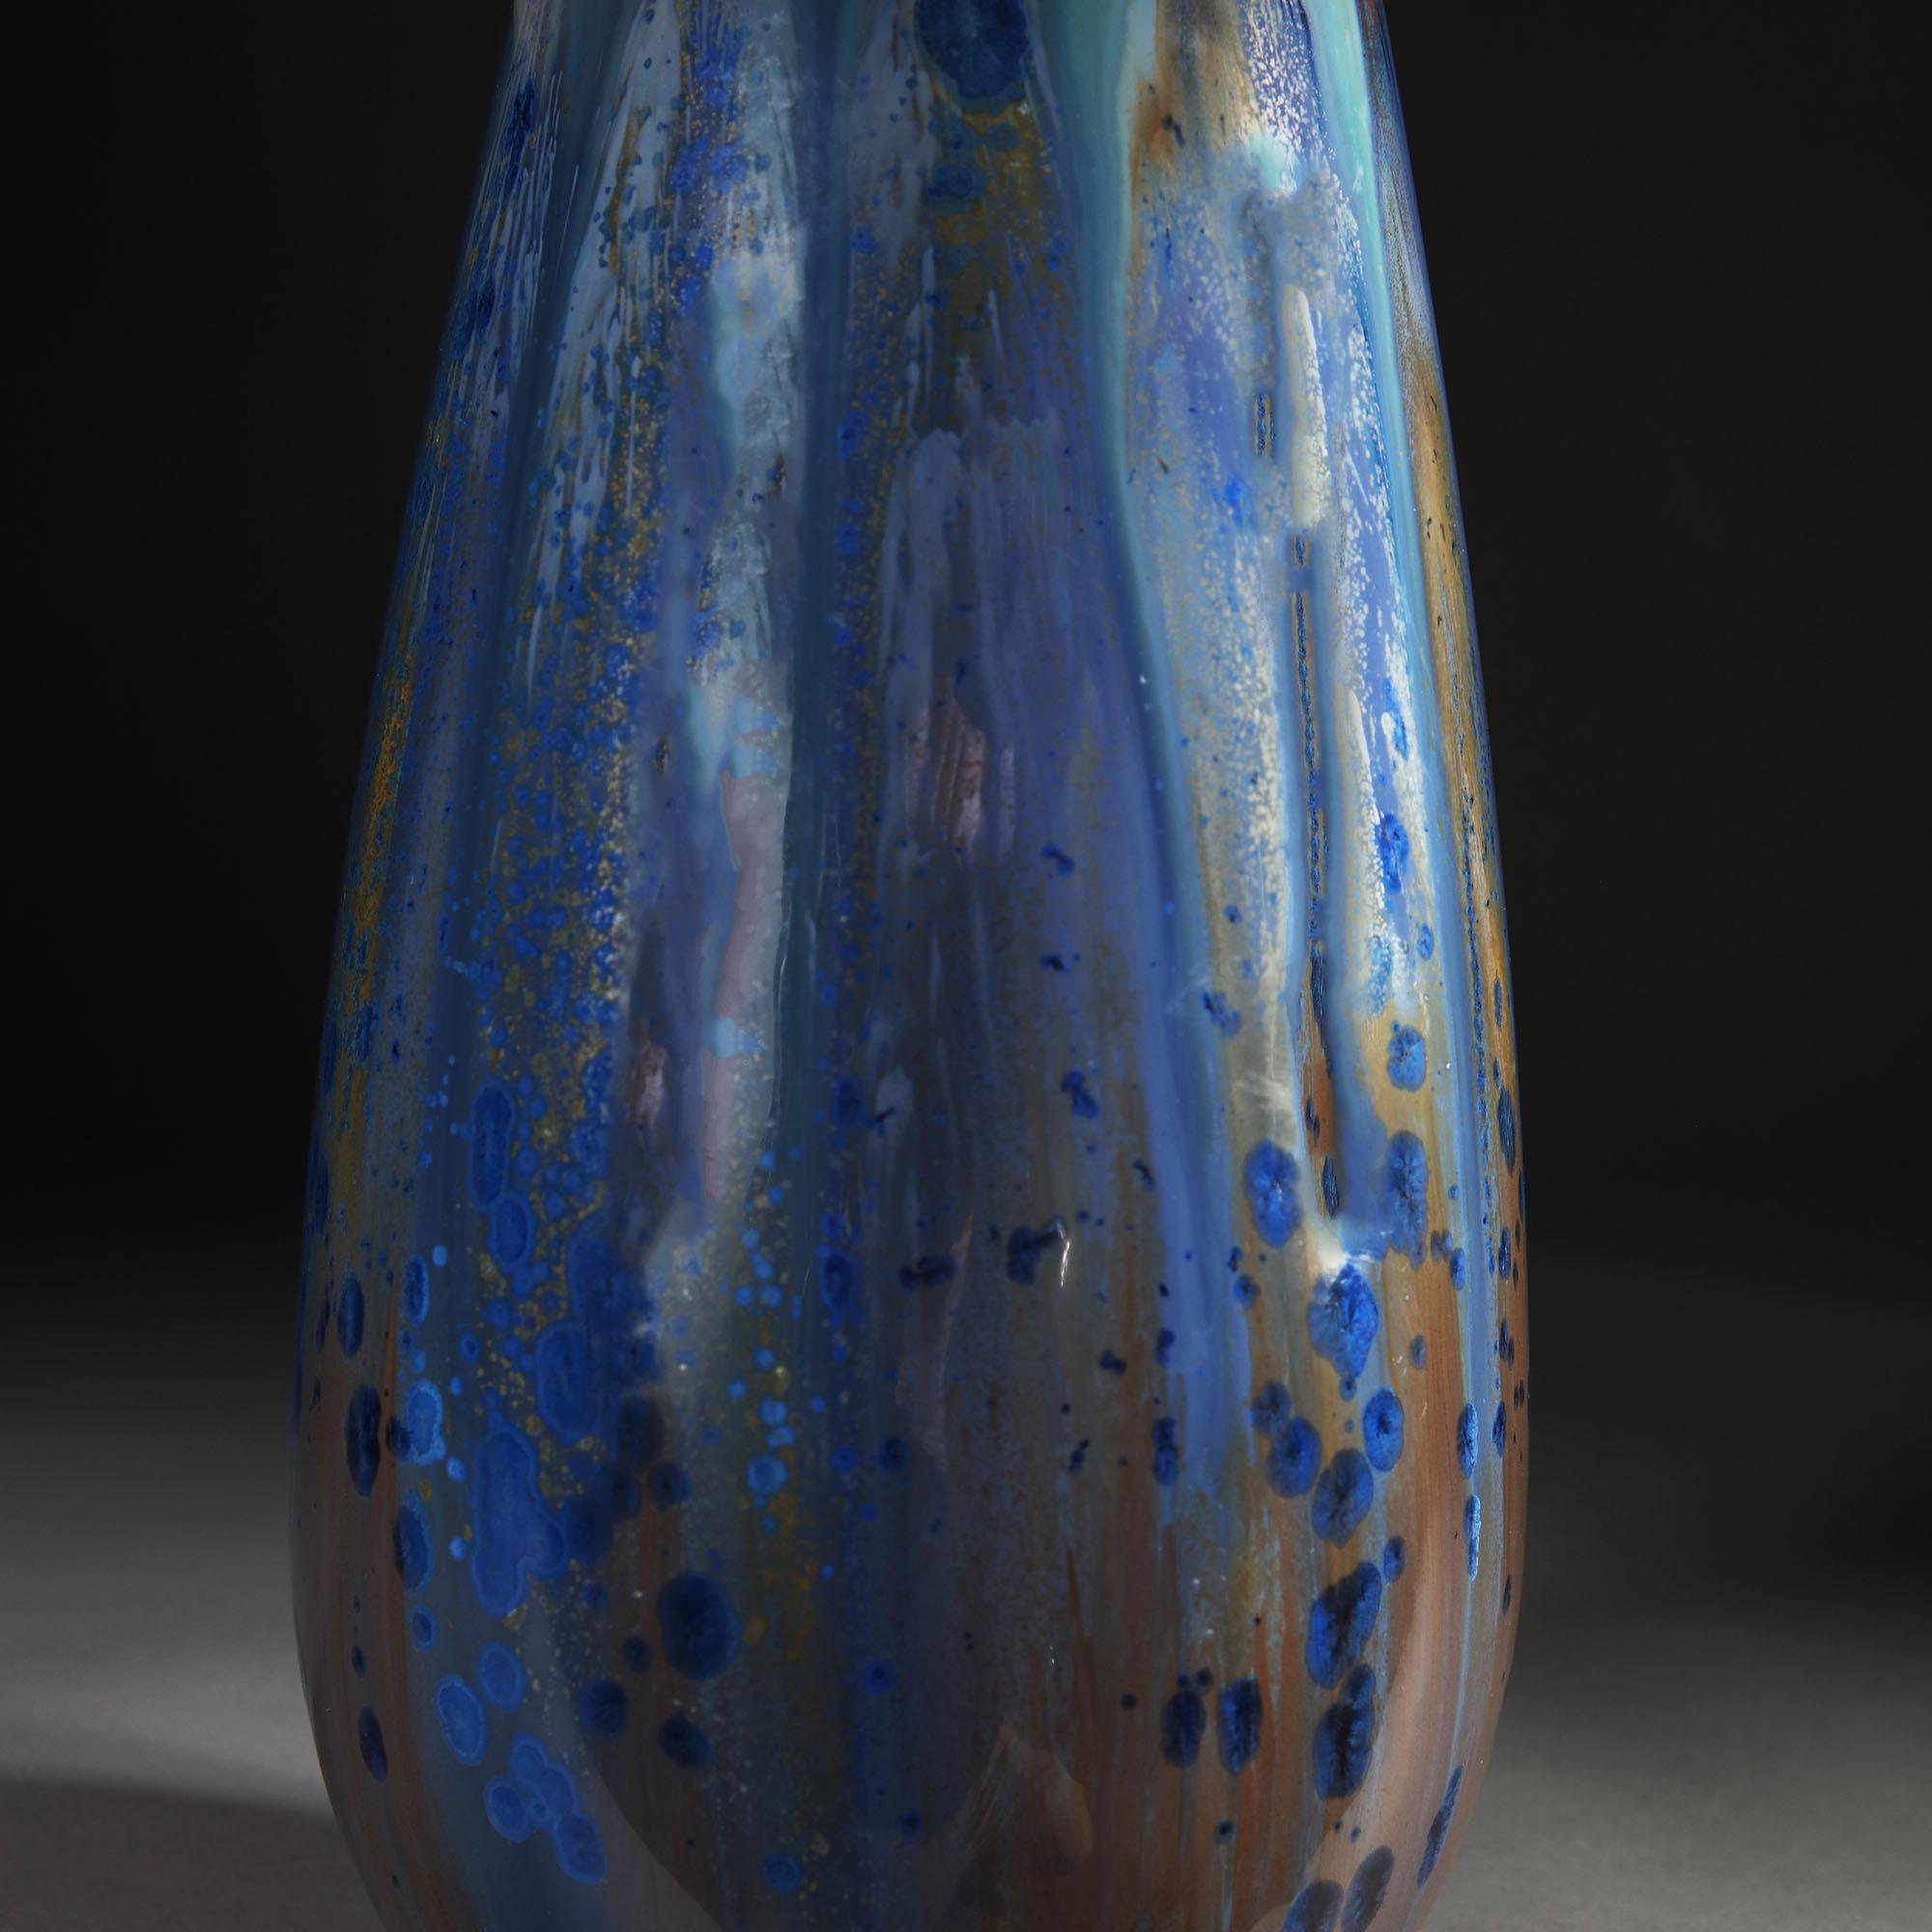 Glazed Early 20th Century Art Pottery Blue Glaze Vase as a Table Lamp by Pierrefonds